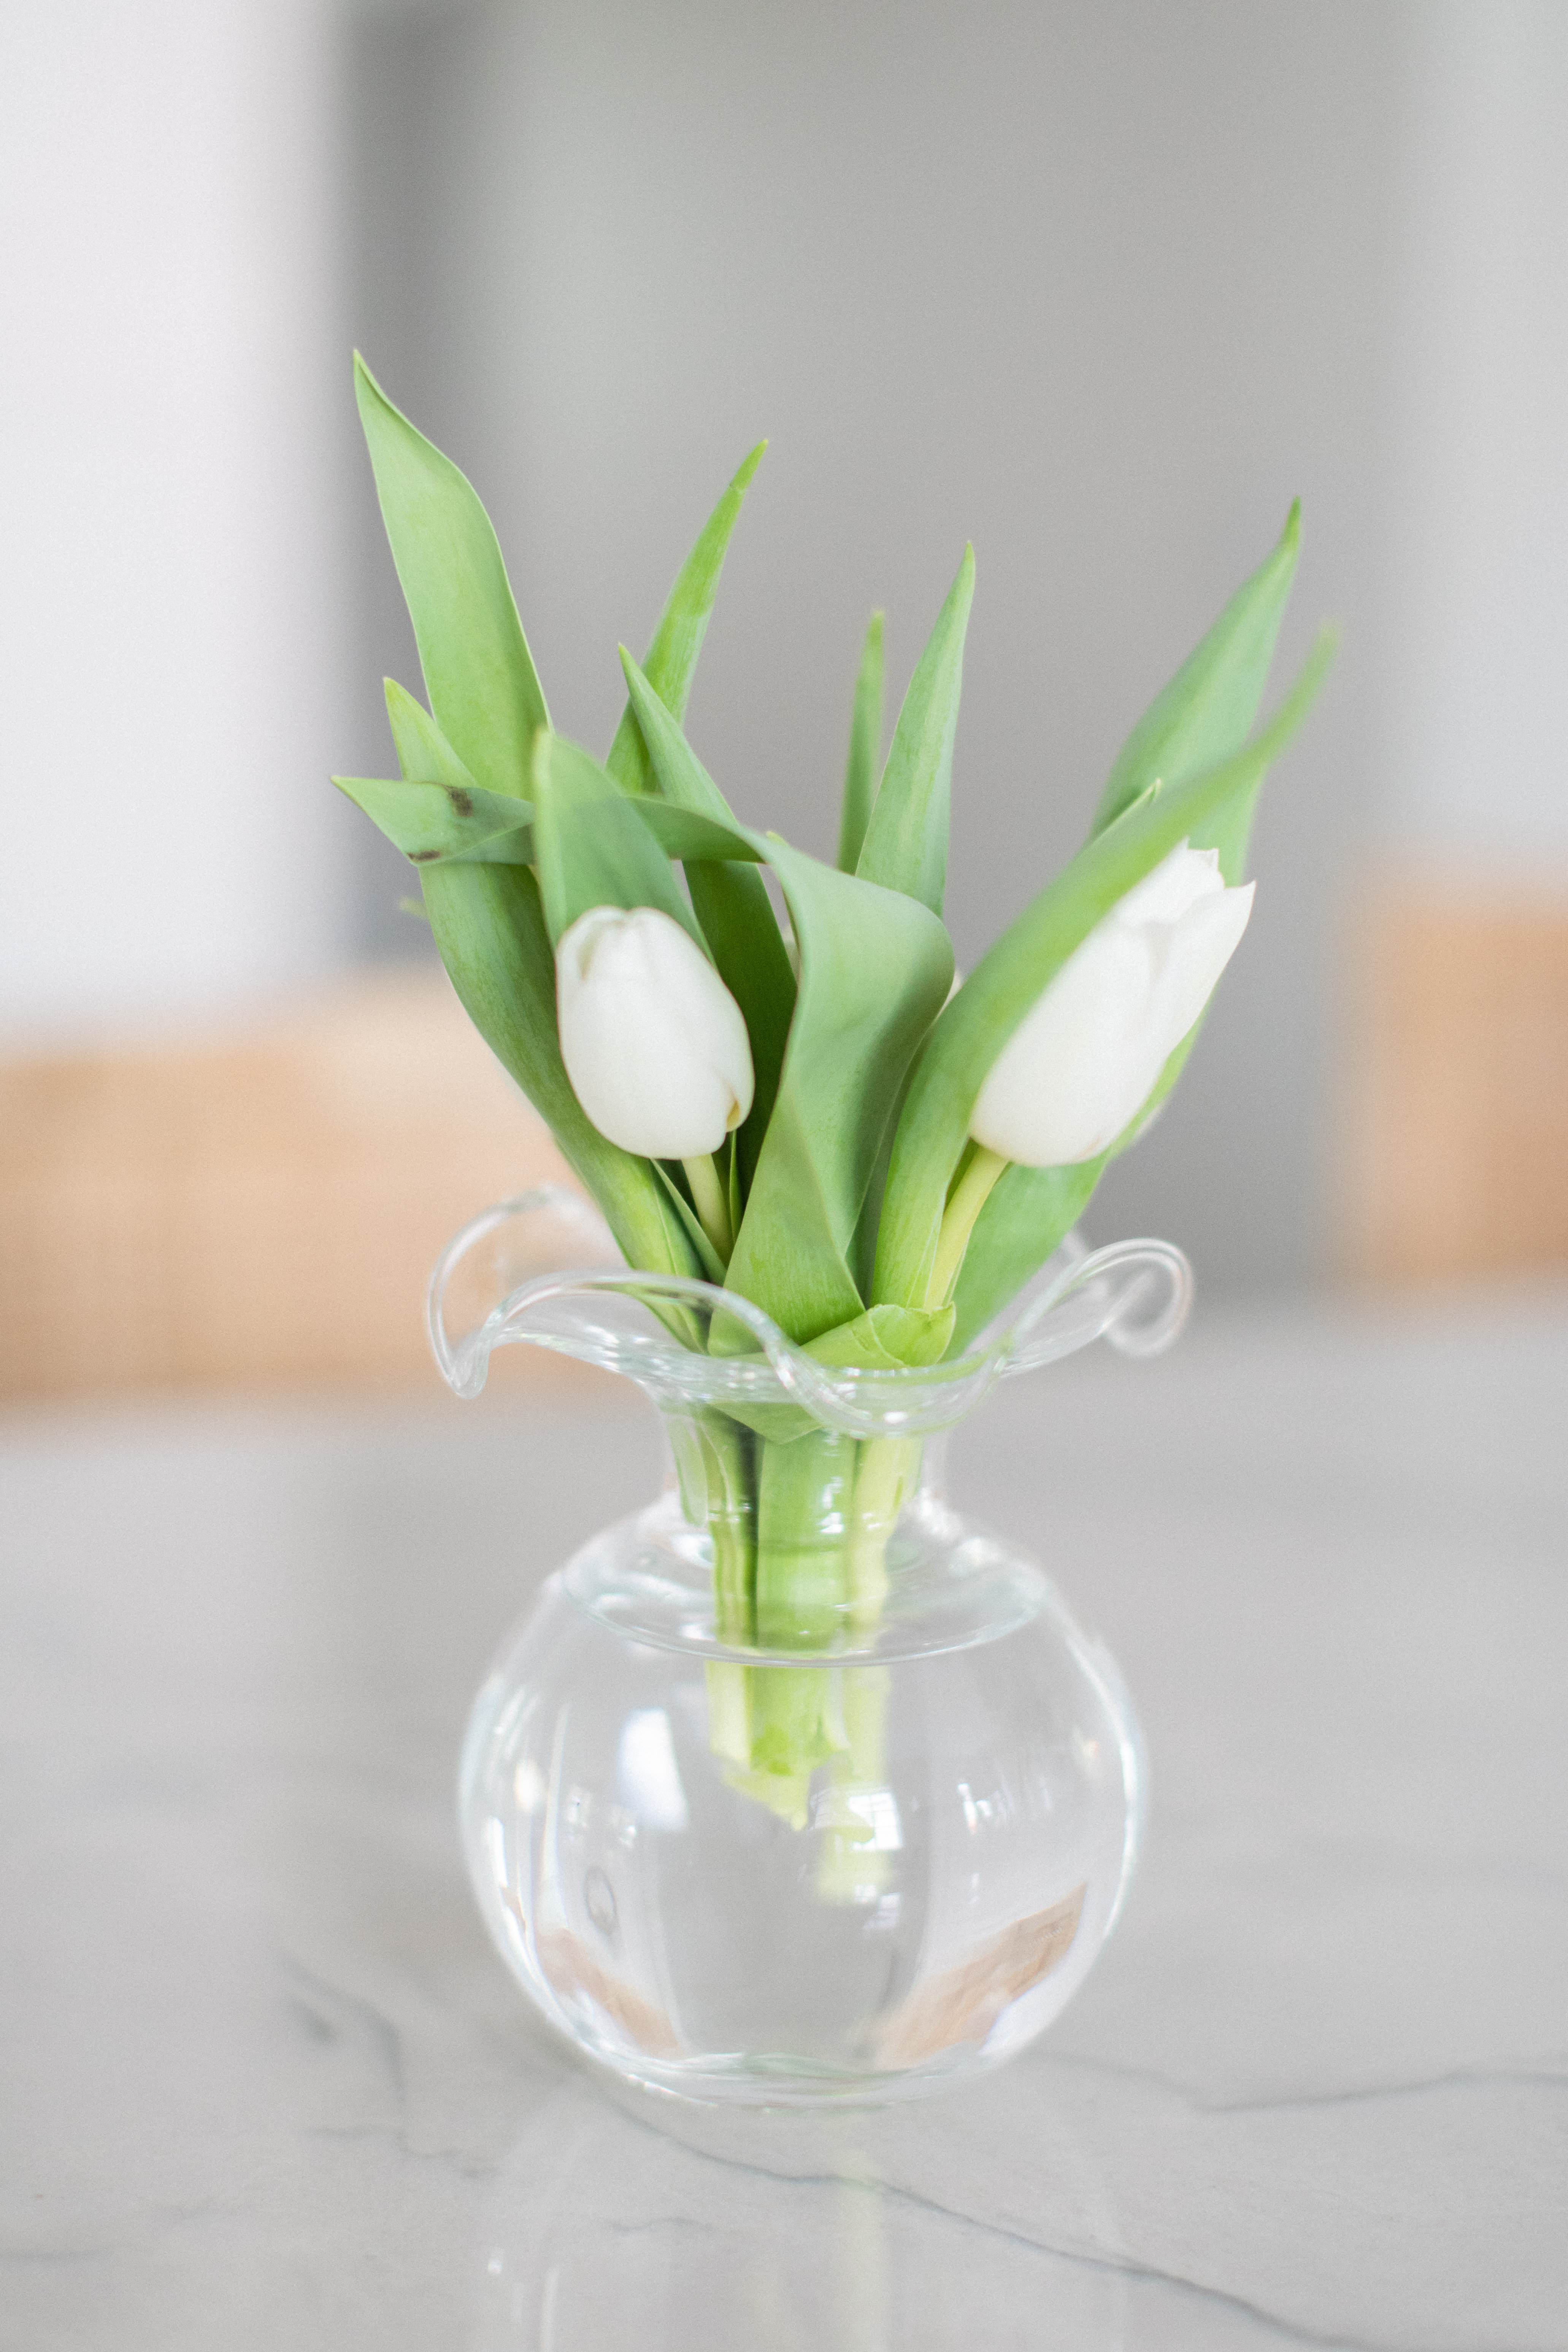 Tulips in small vase